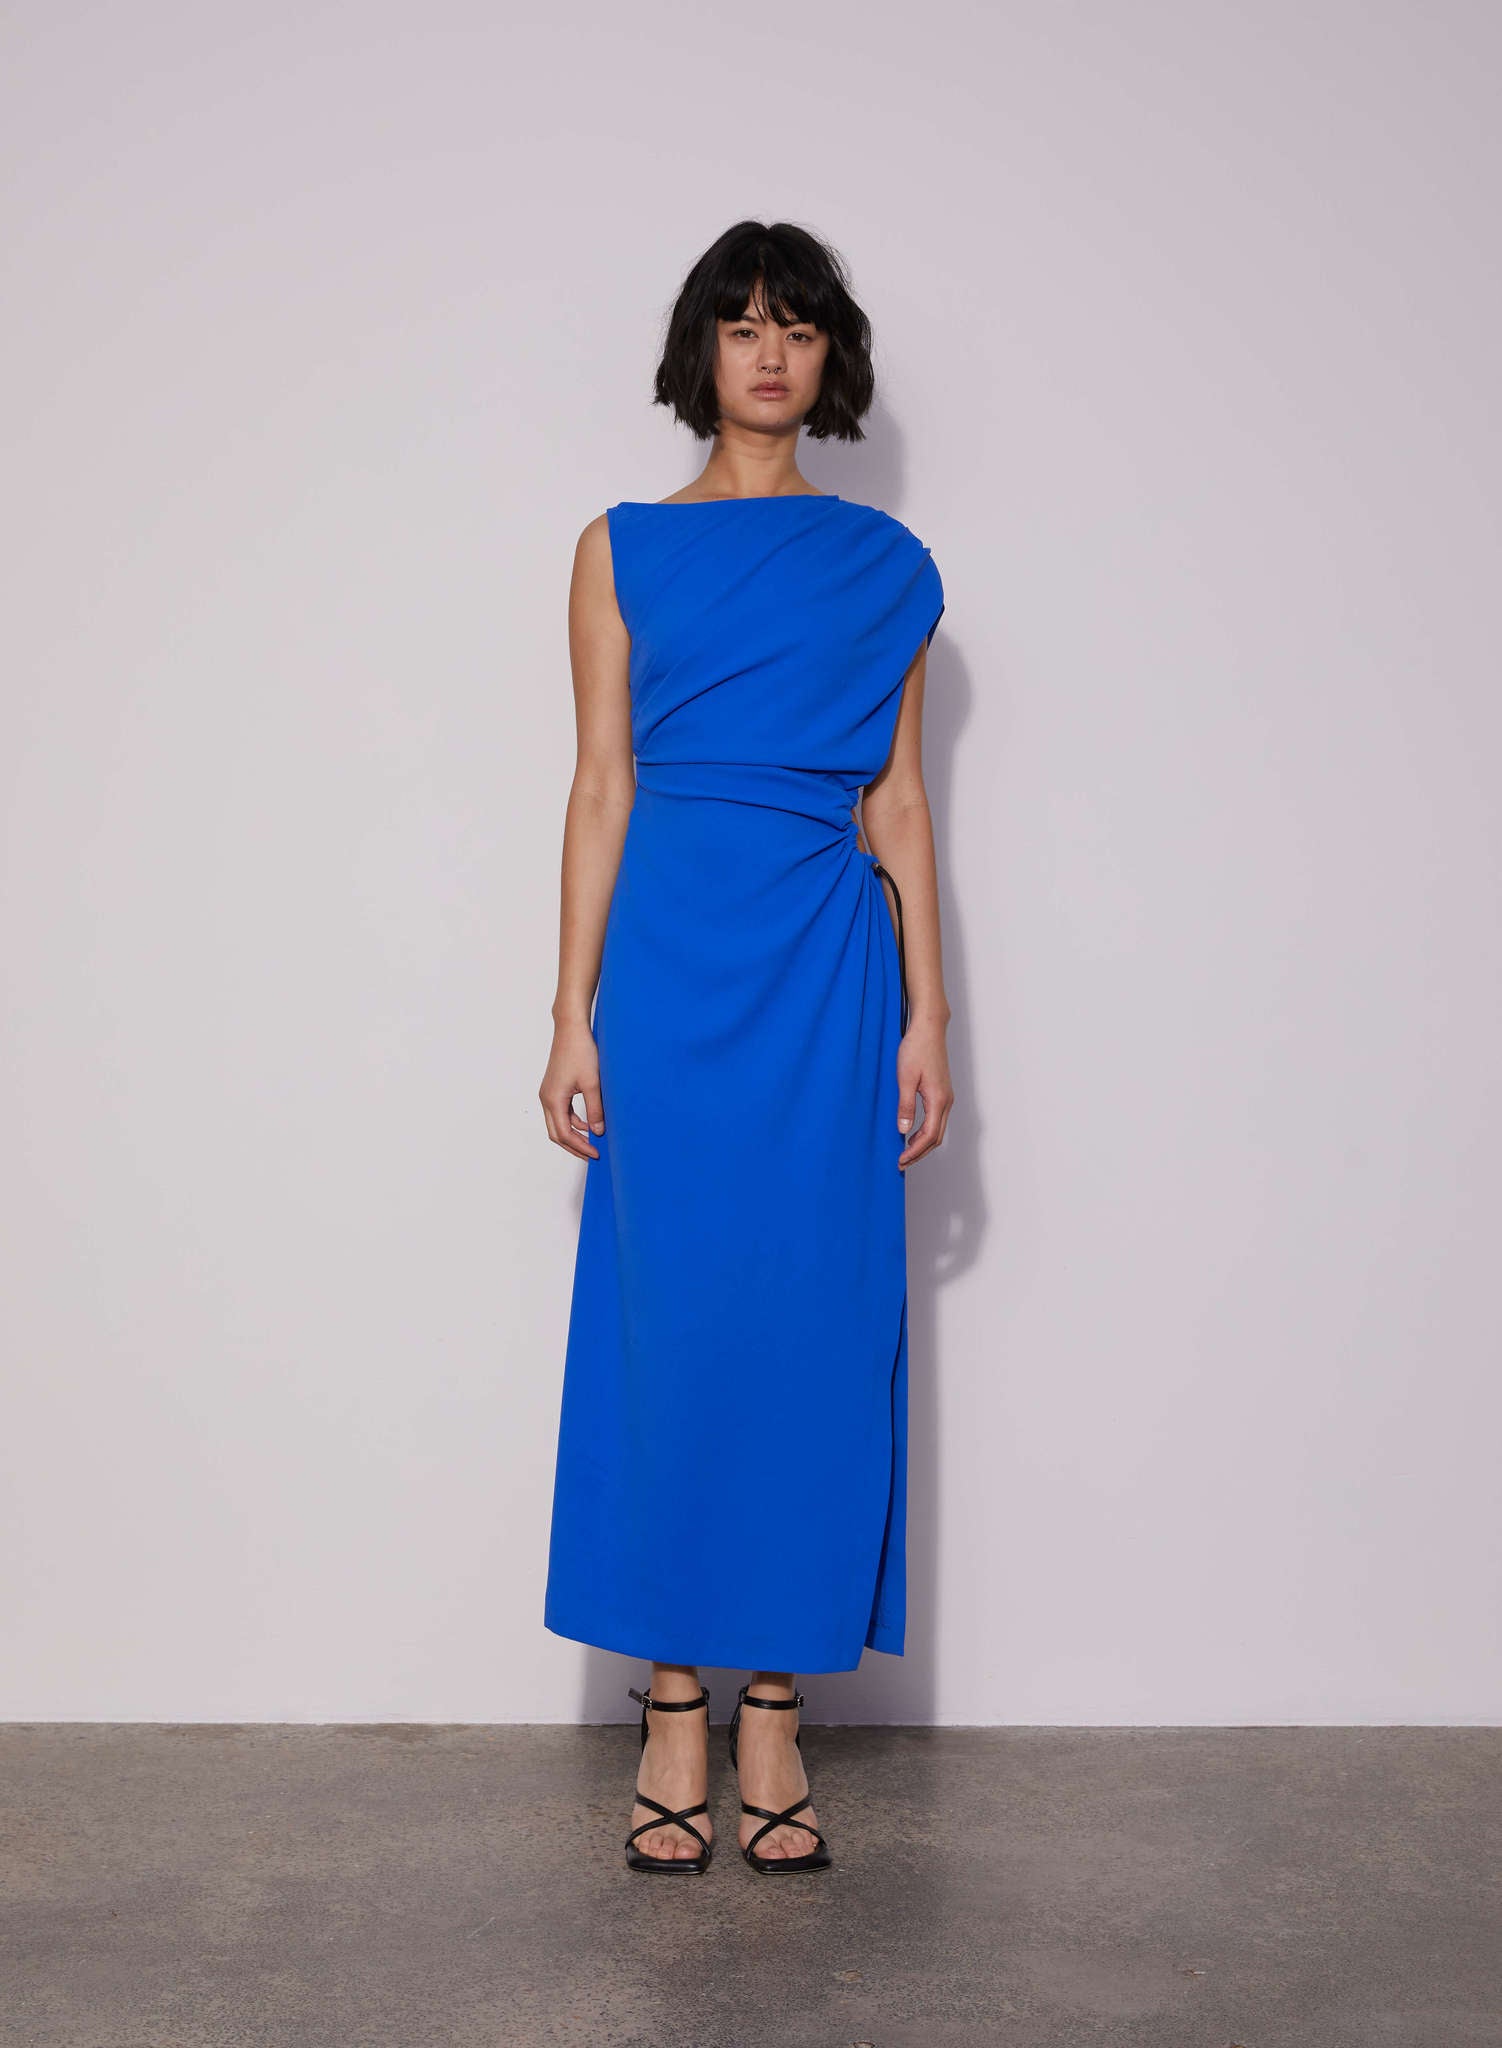 Wynn Hamlyn Bungy Slip Dress in Persian Blue available at TNT The New Trend Australia.